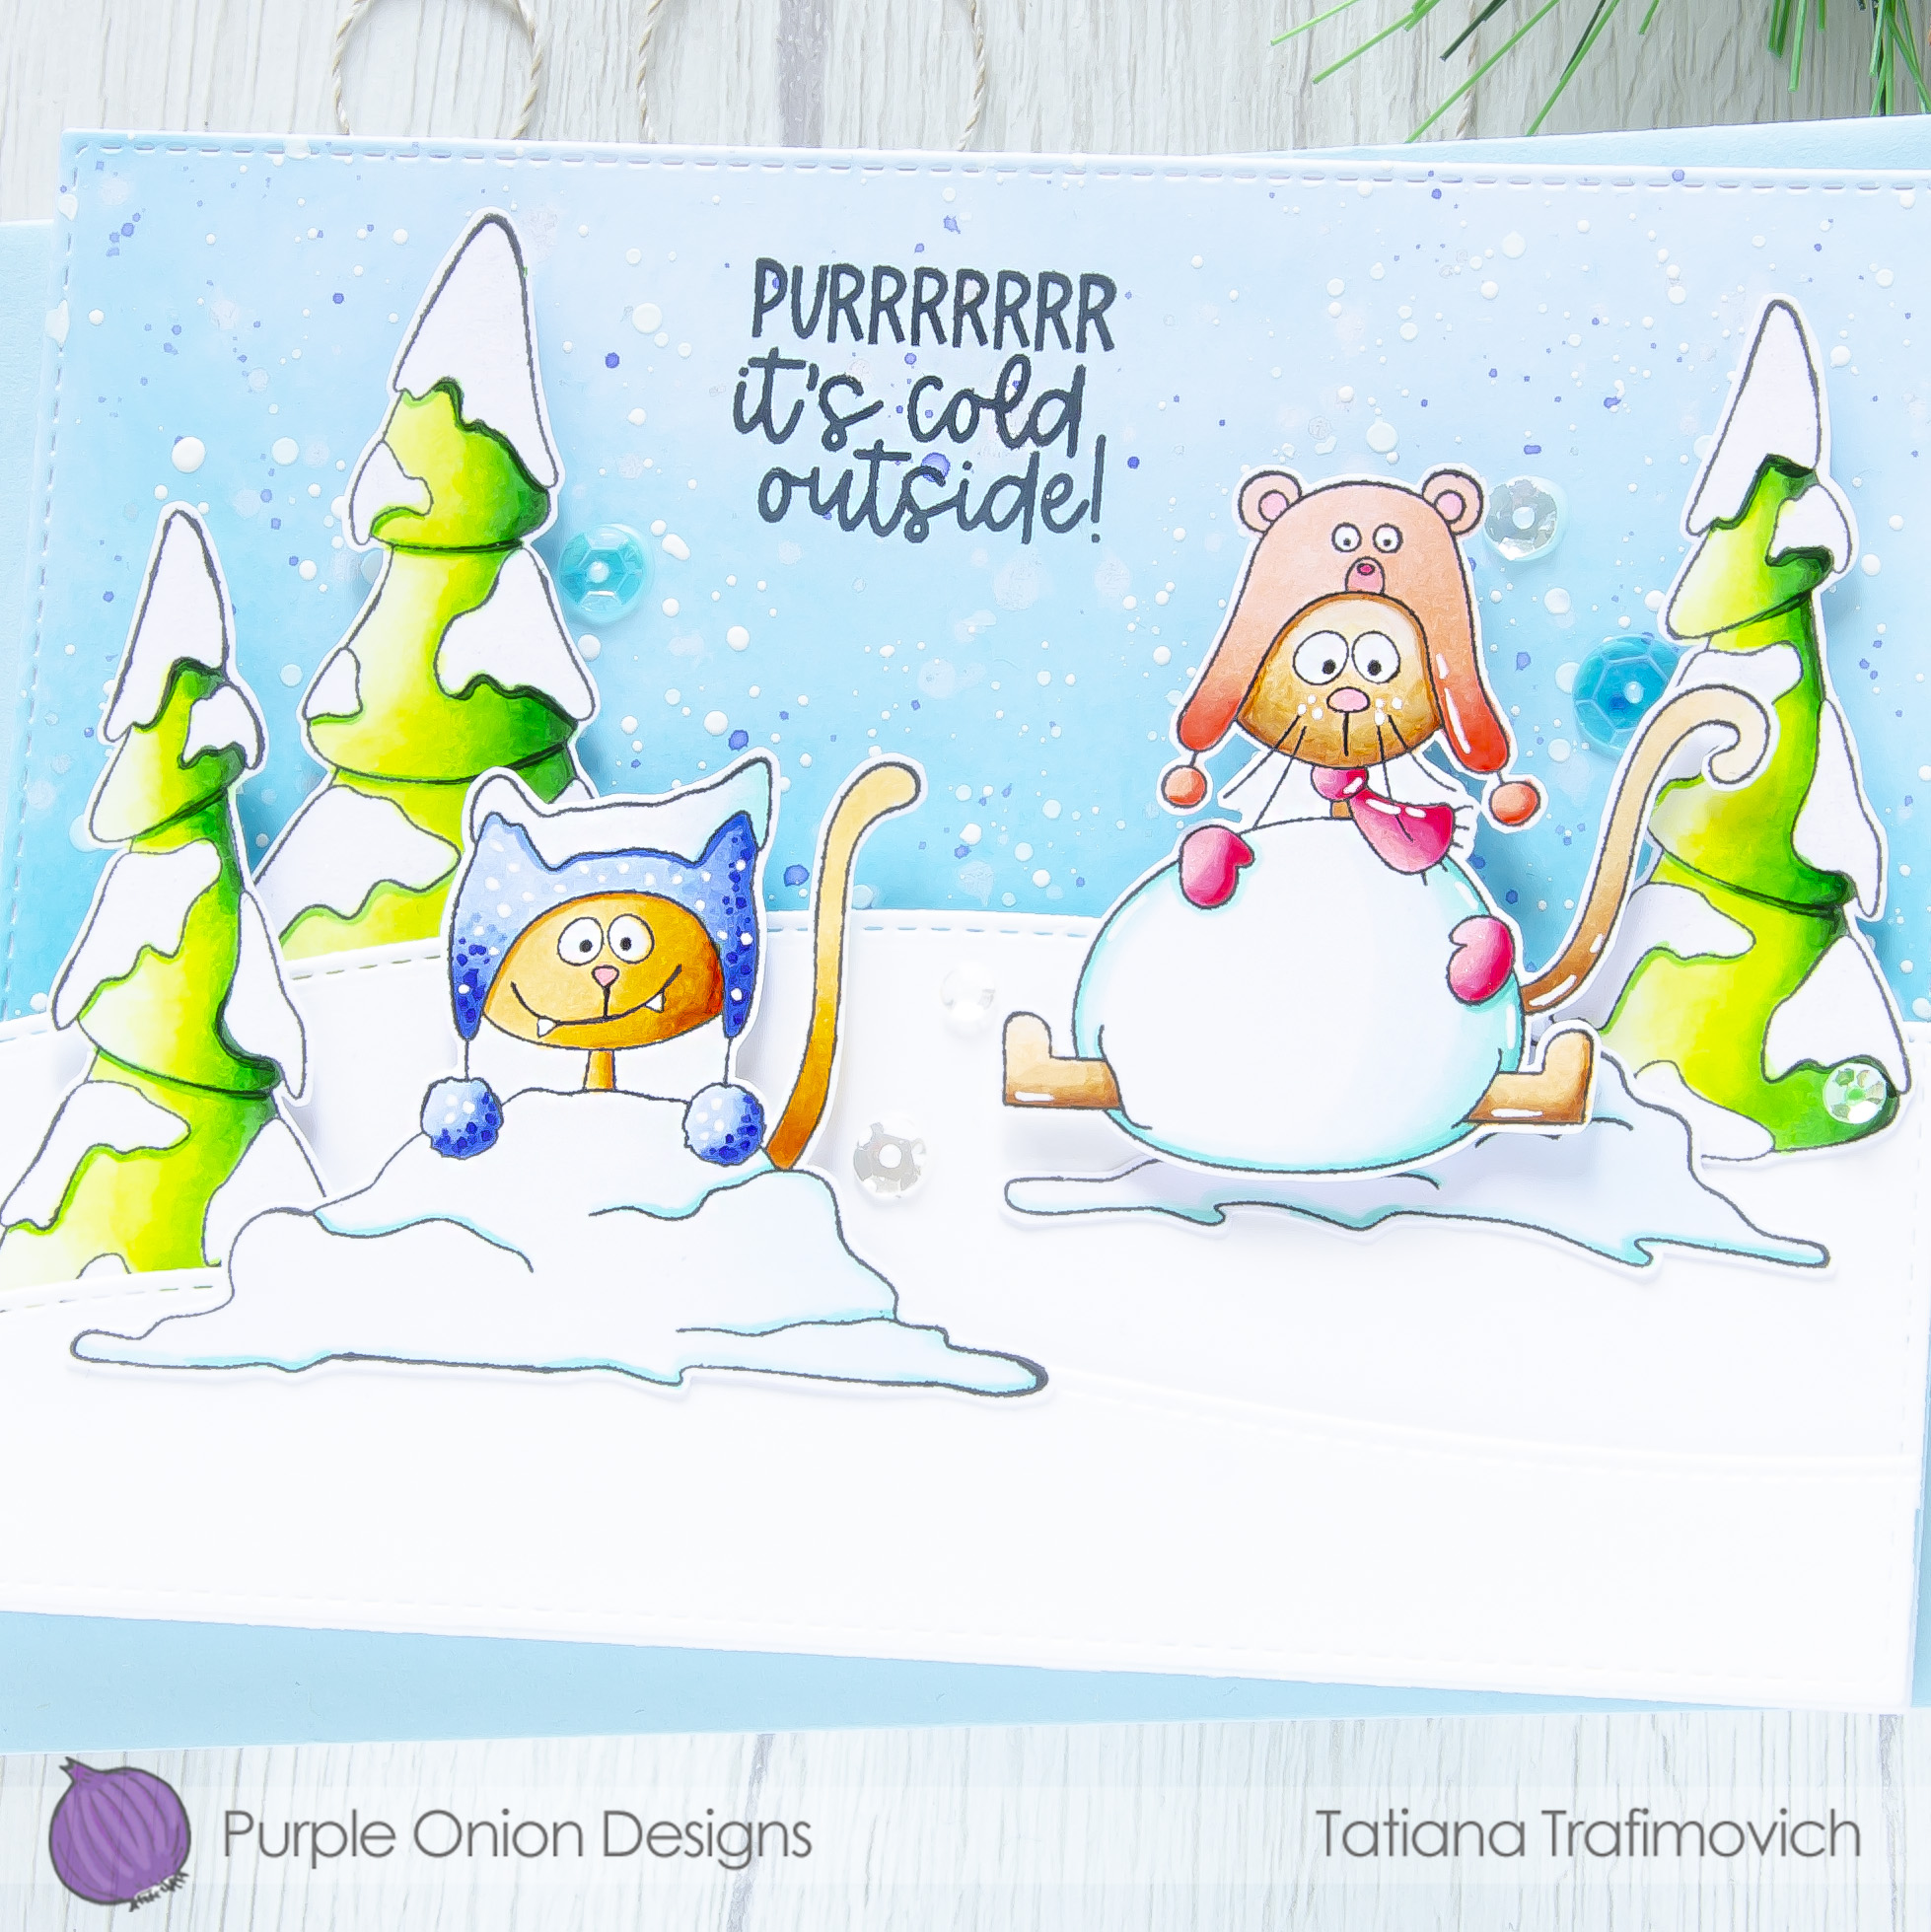 Purrrrr It's Cold Outside! #handmade card by Tatiana Trafimovich #tatianacraftandart - stamps by Purple Onion Designs